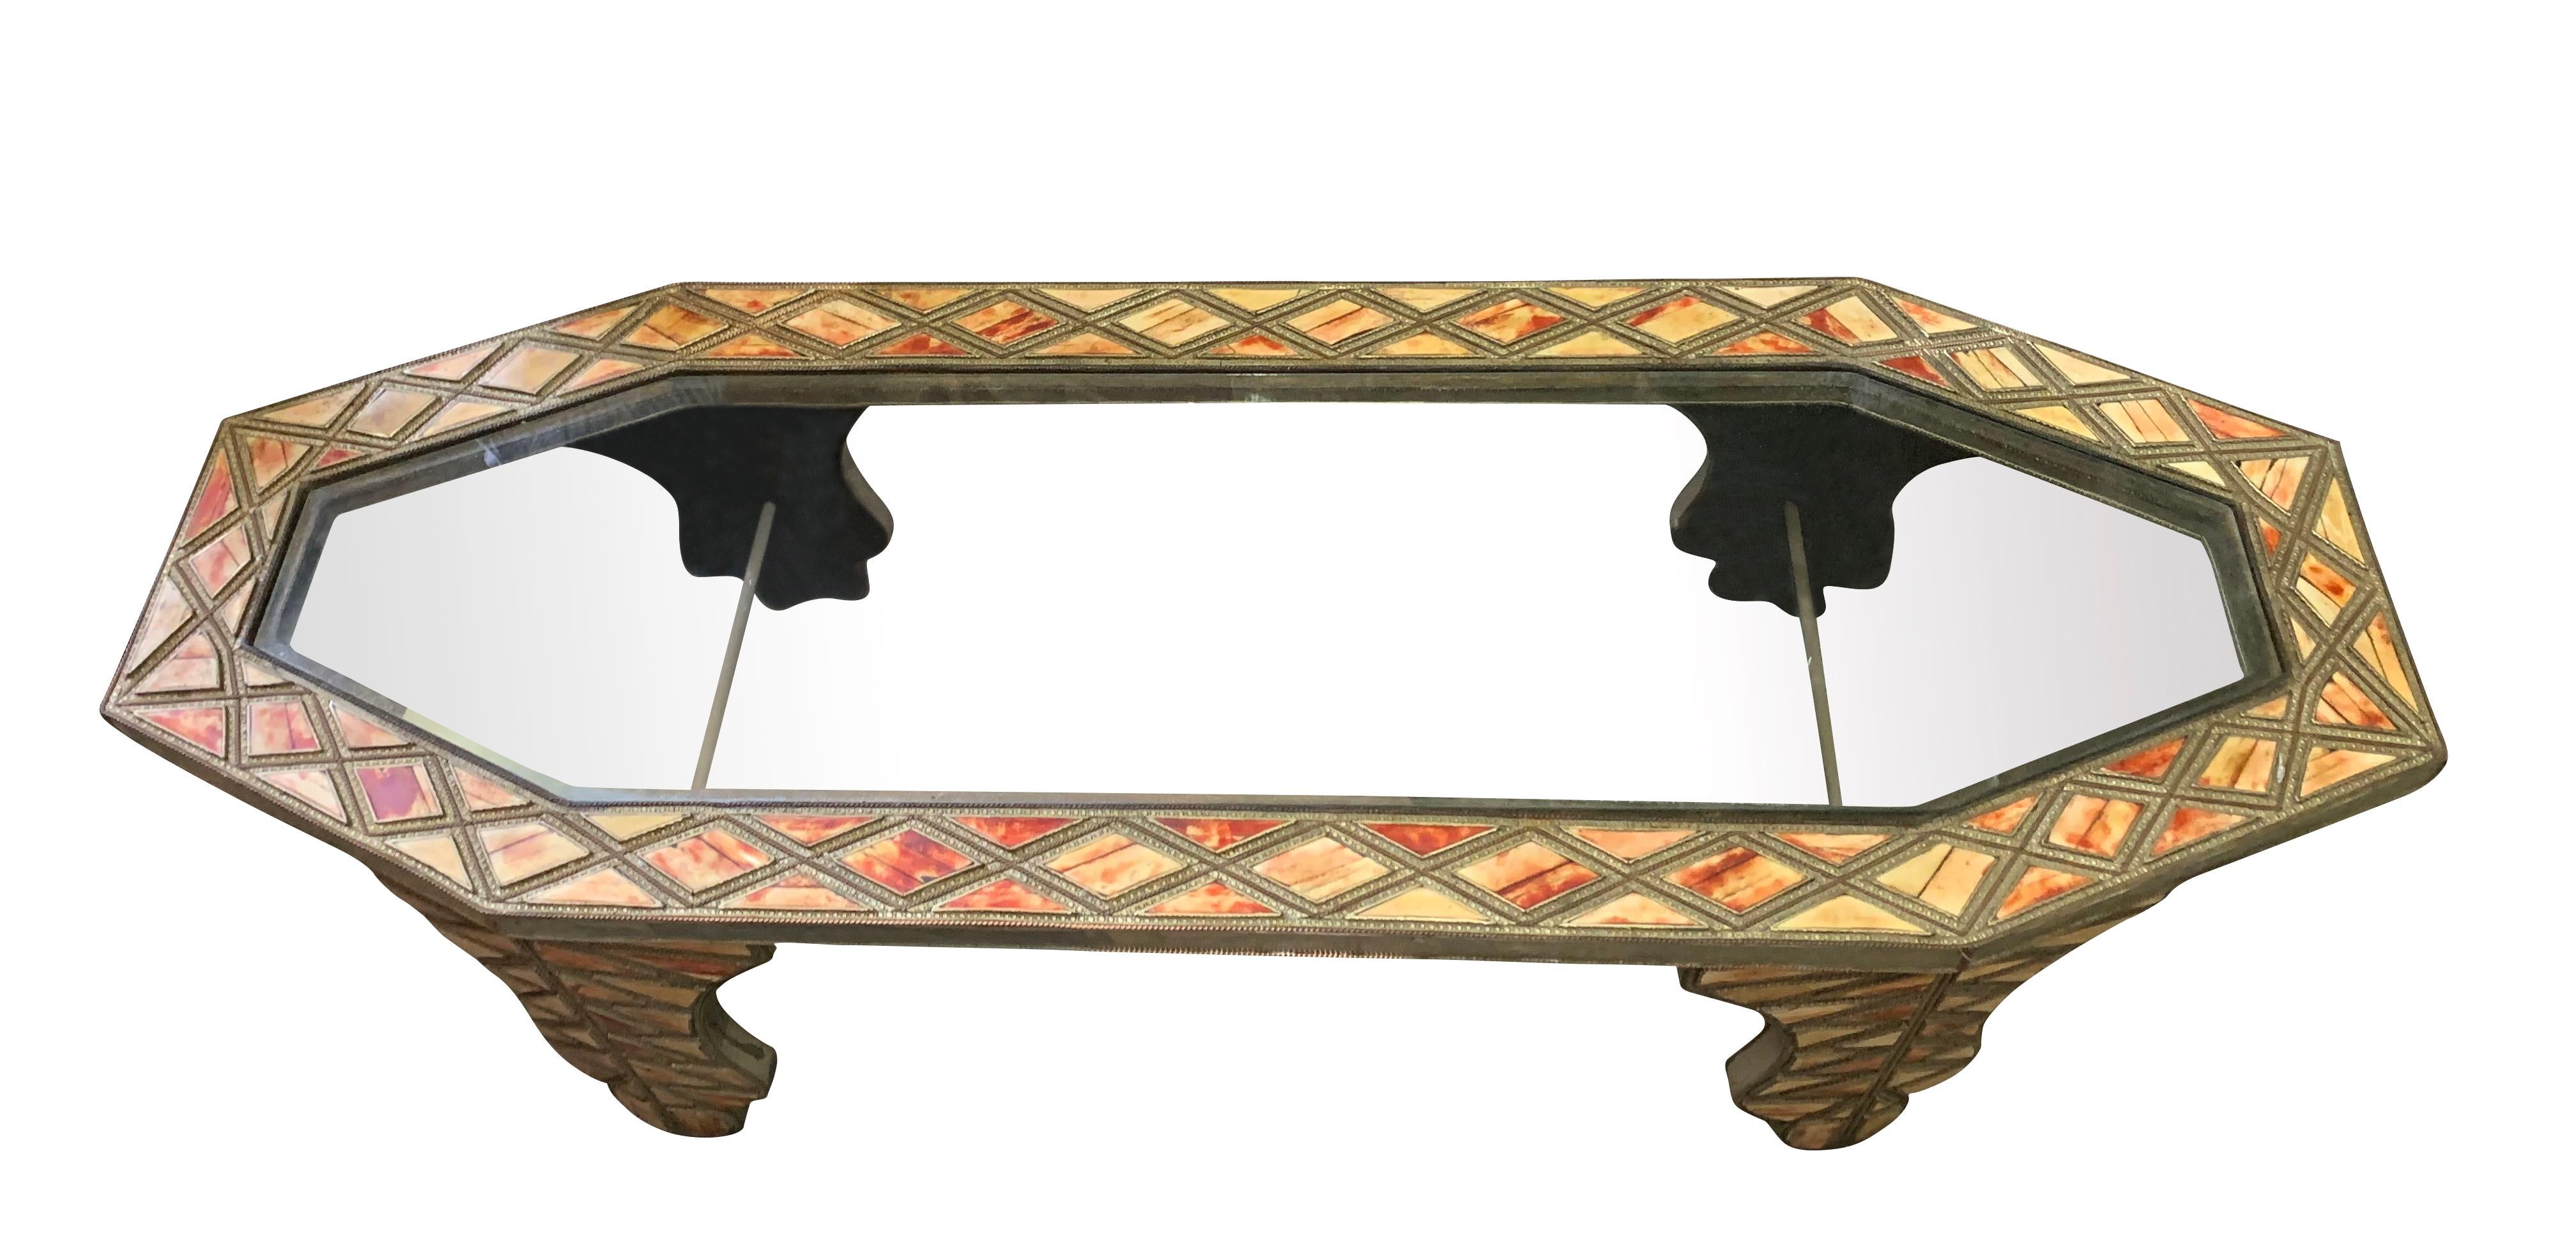 Marocain Table basse octogonale allongée, Maroc, milieu du siècle dernier en vente